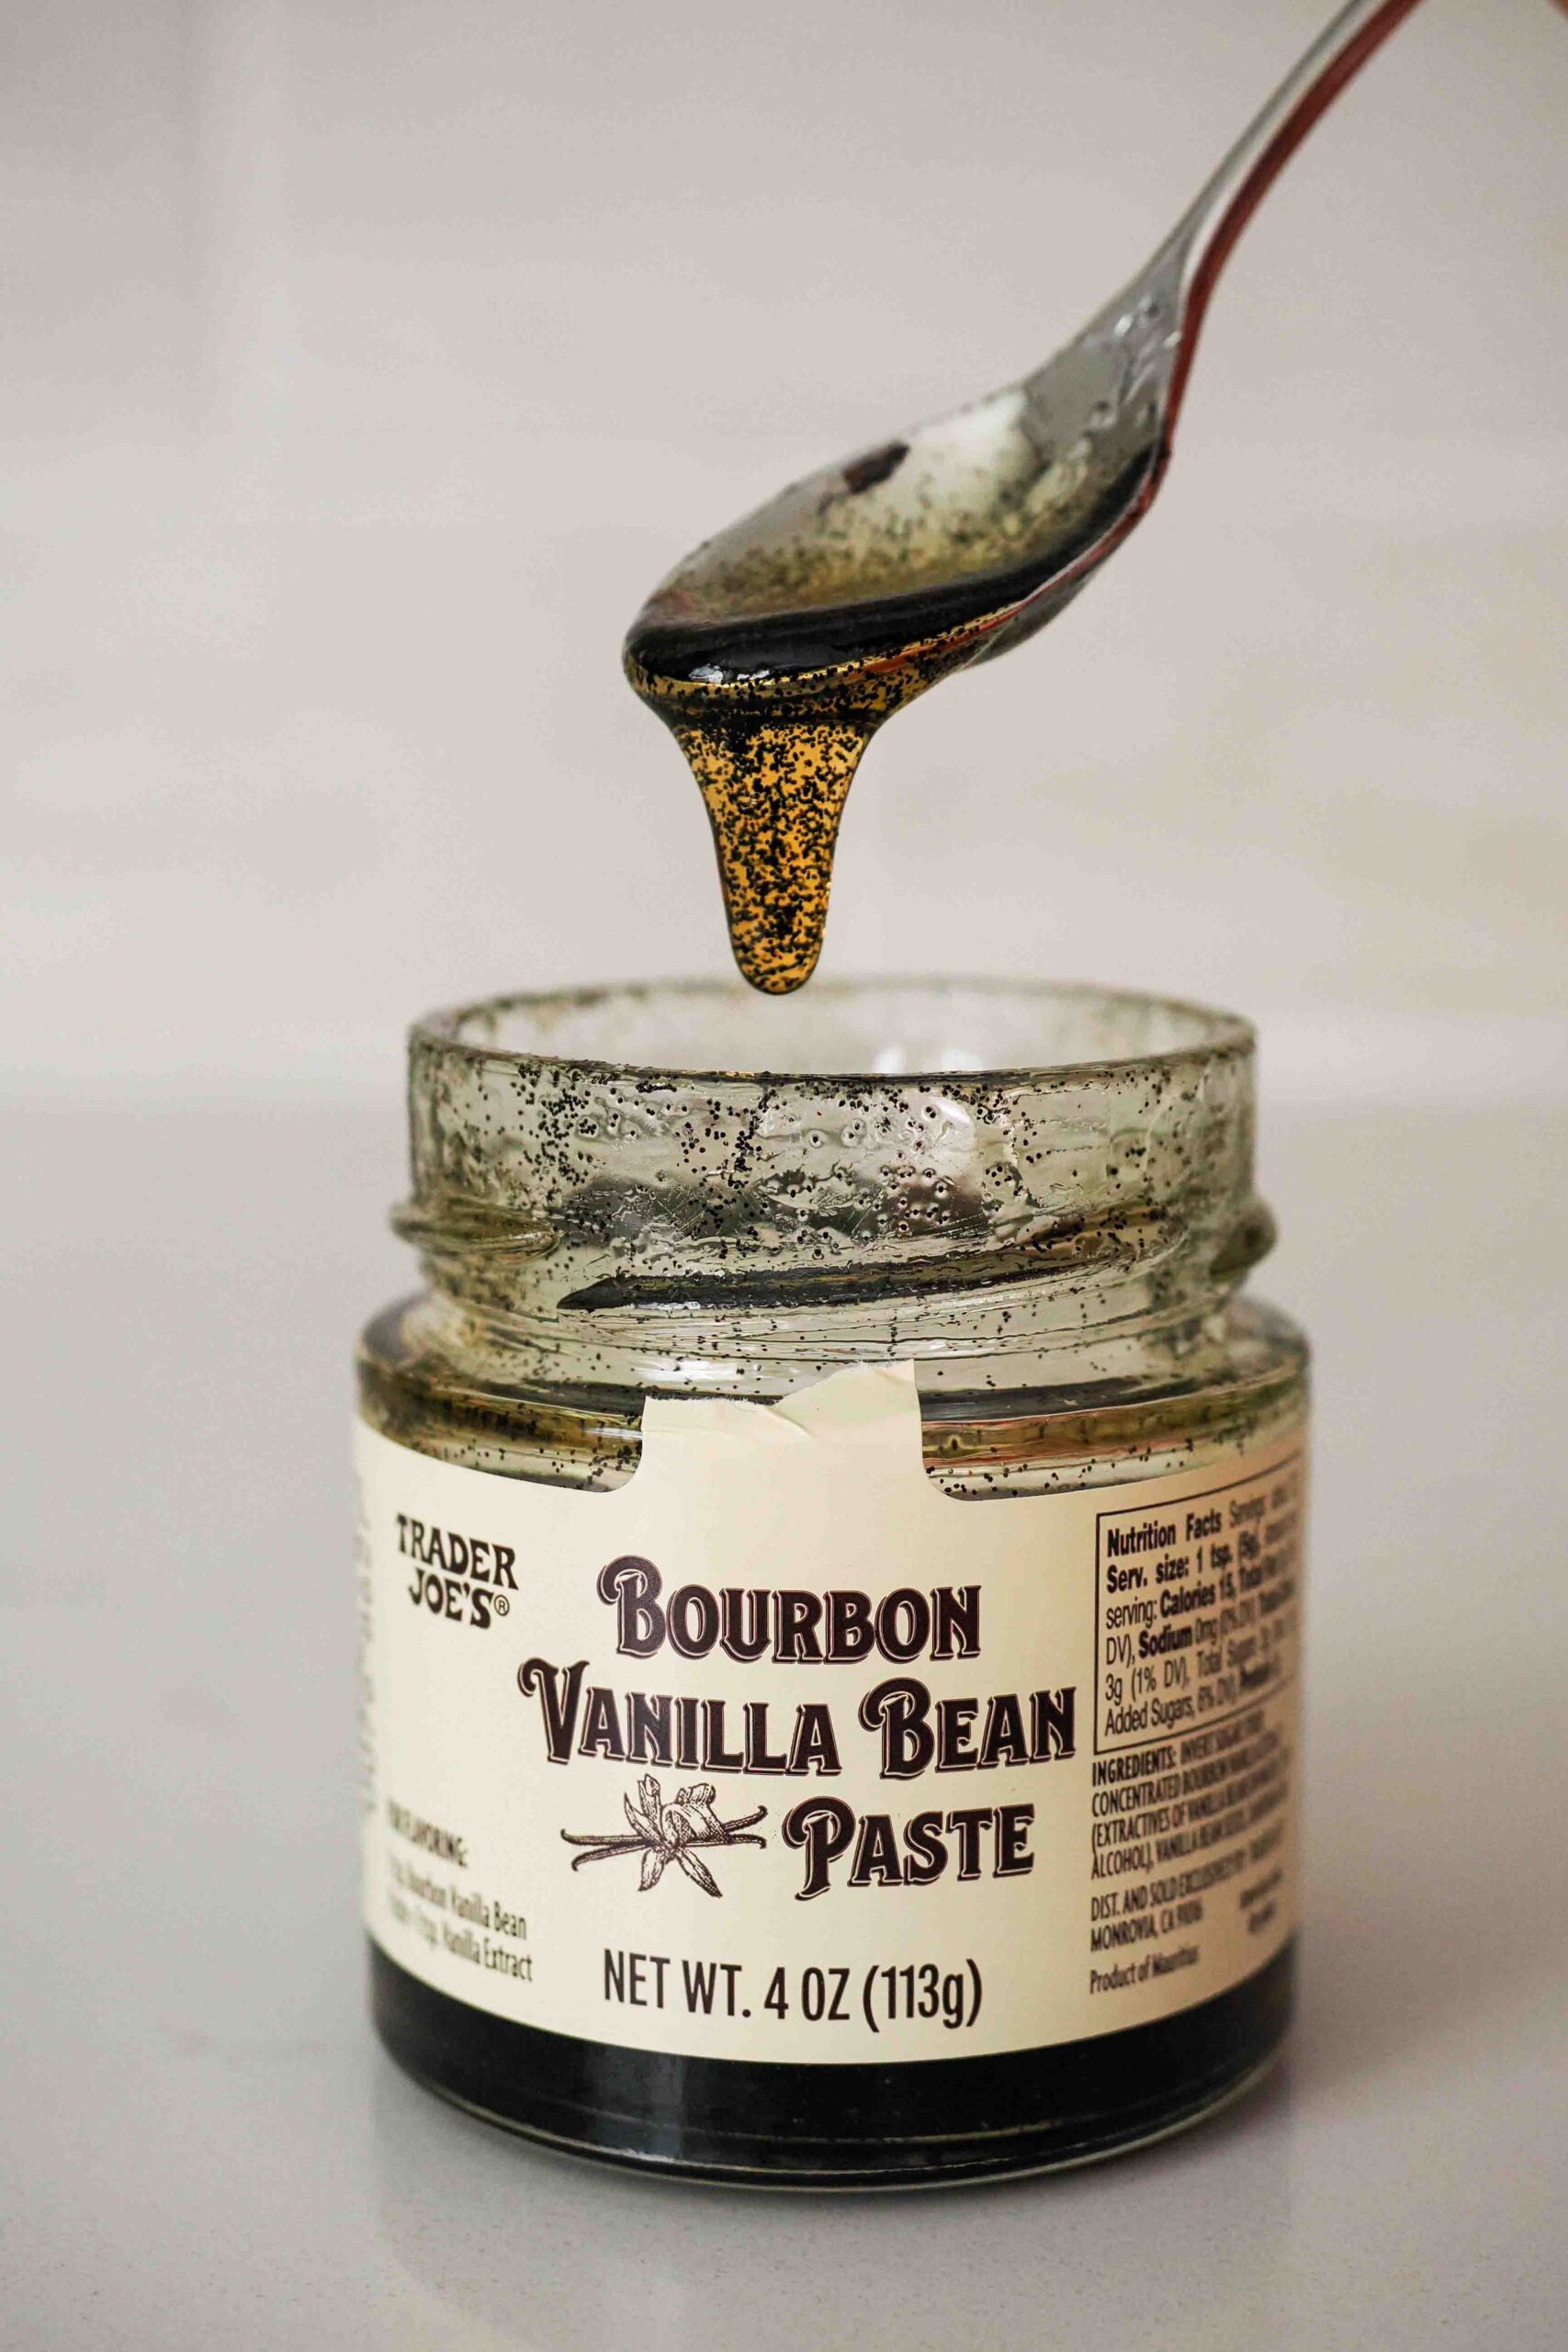 Trader Joe's Bourbon vanilla bean paste drips off a spoon back into its jar.